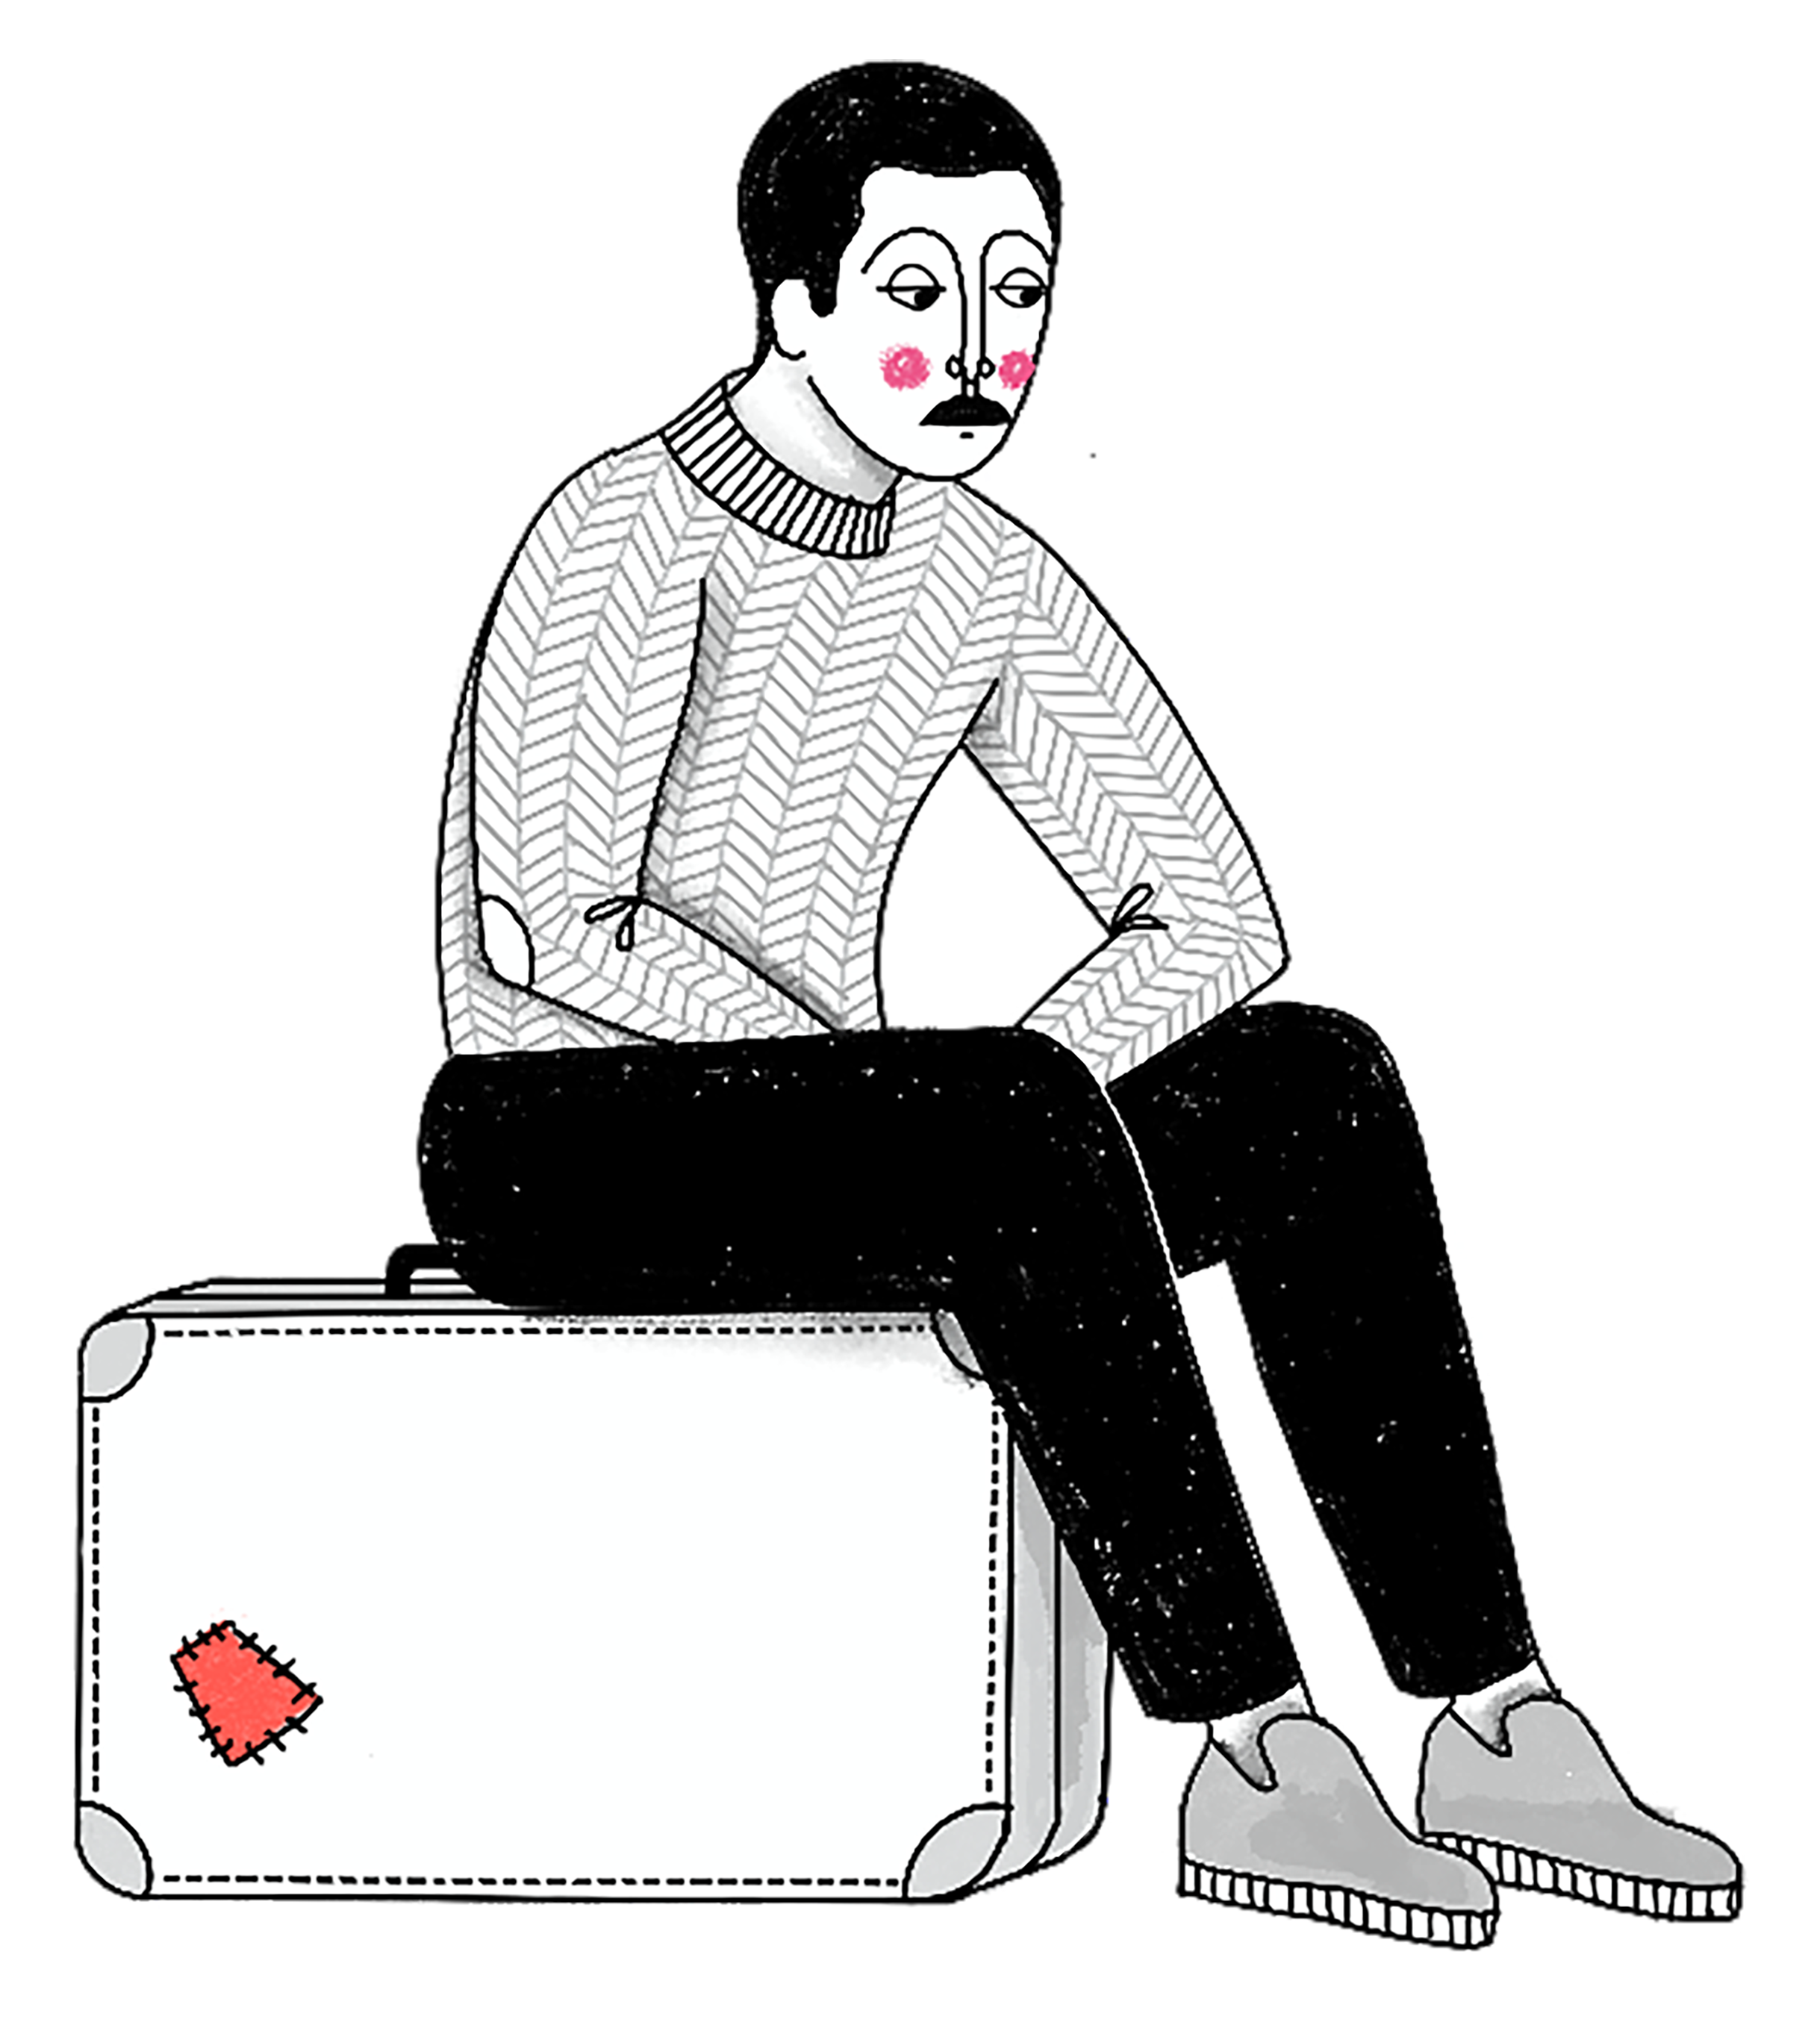 Man sitting on suitcase